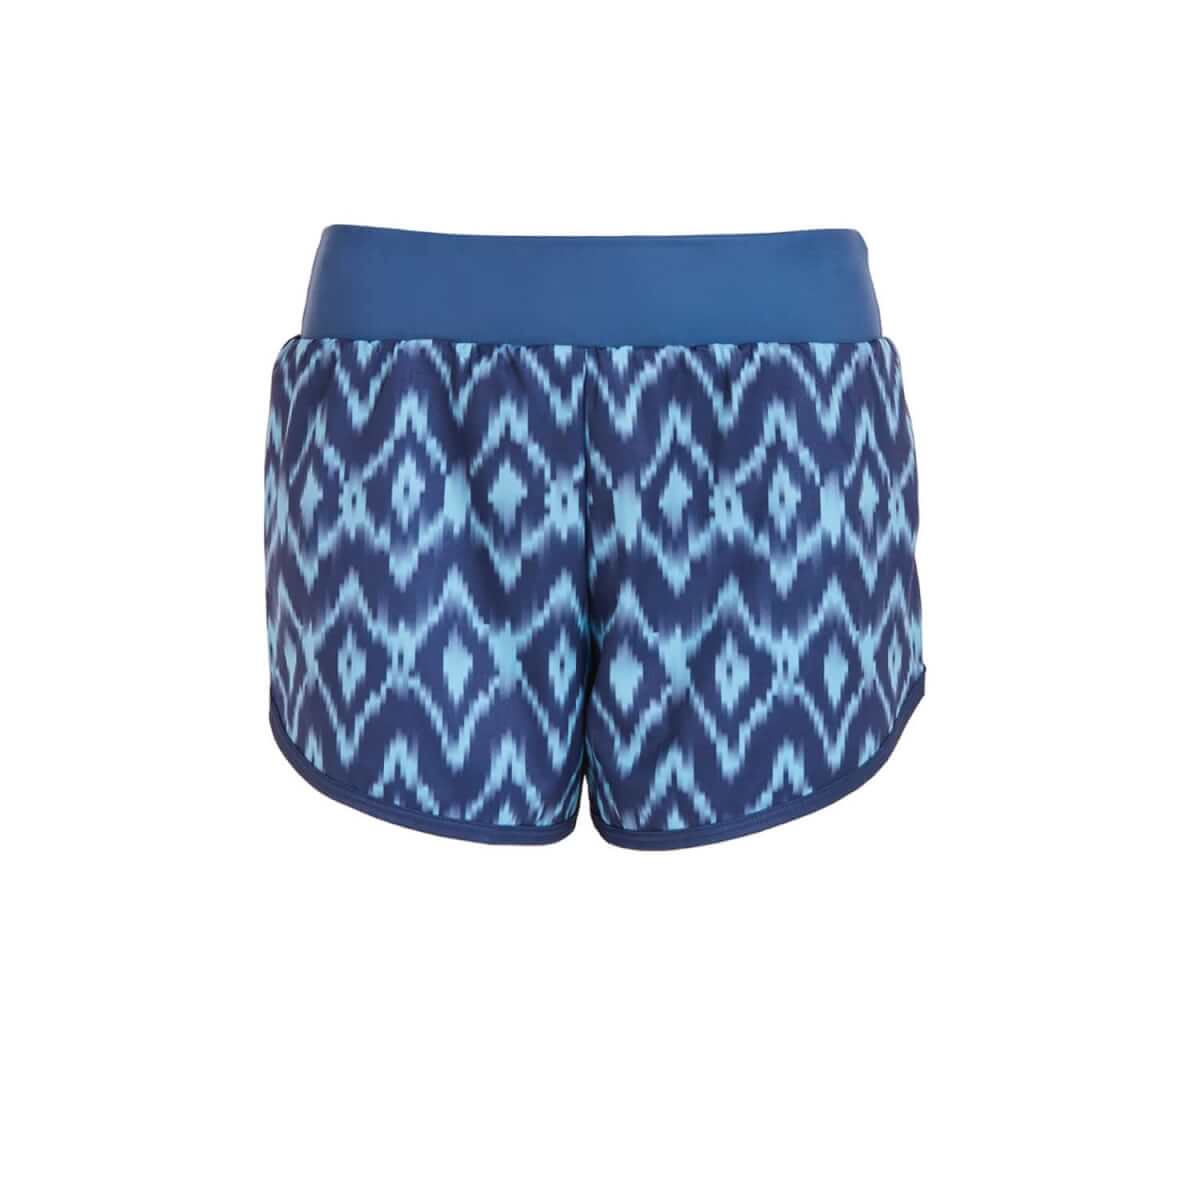 Blue printed running shorts